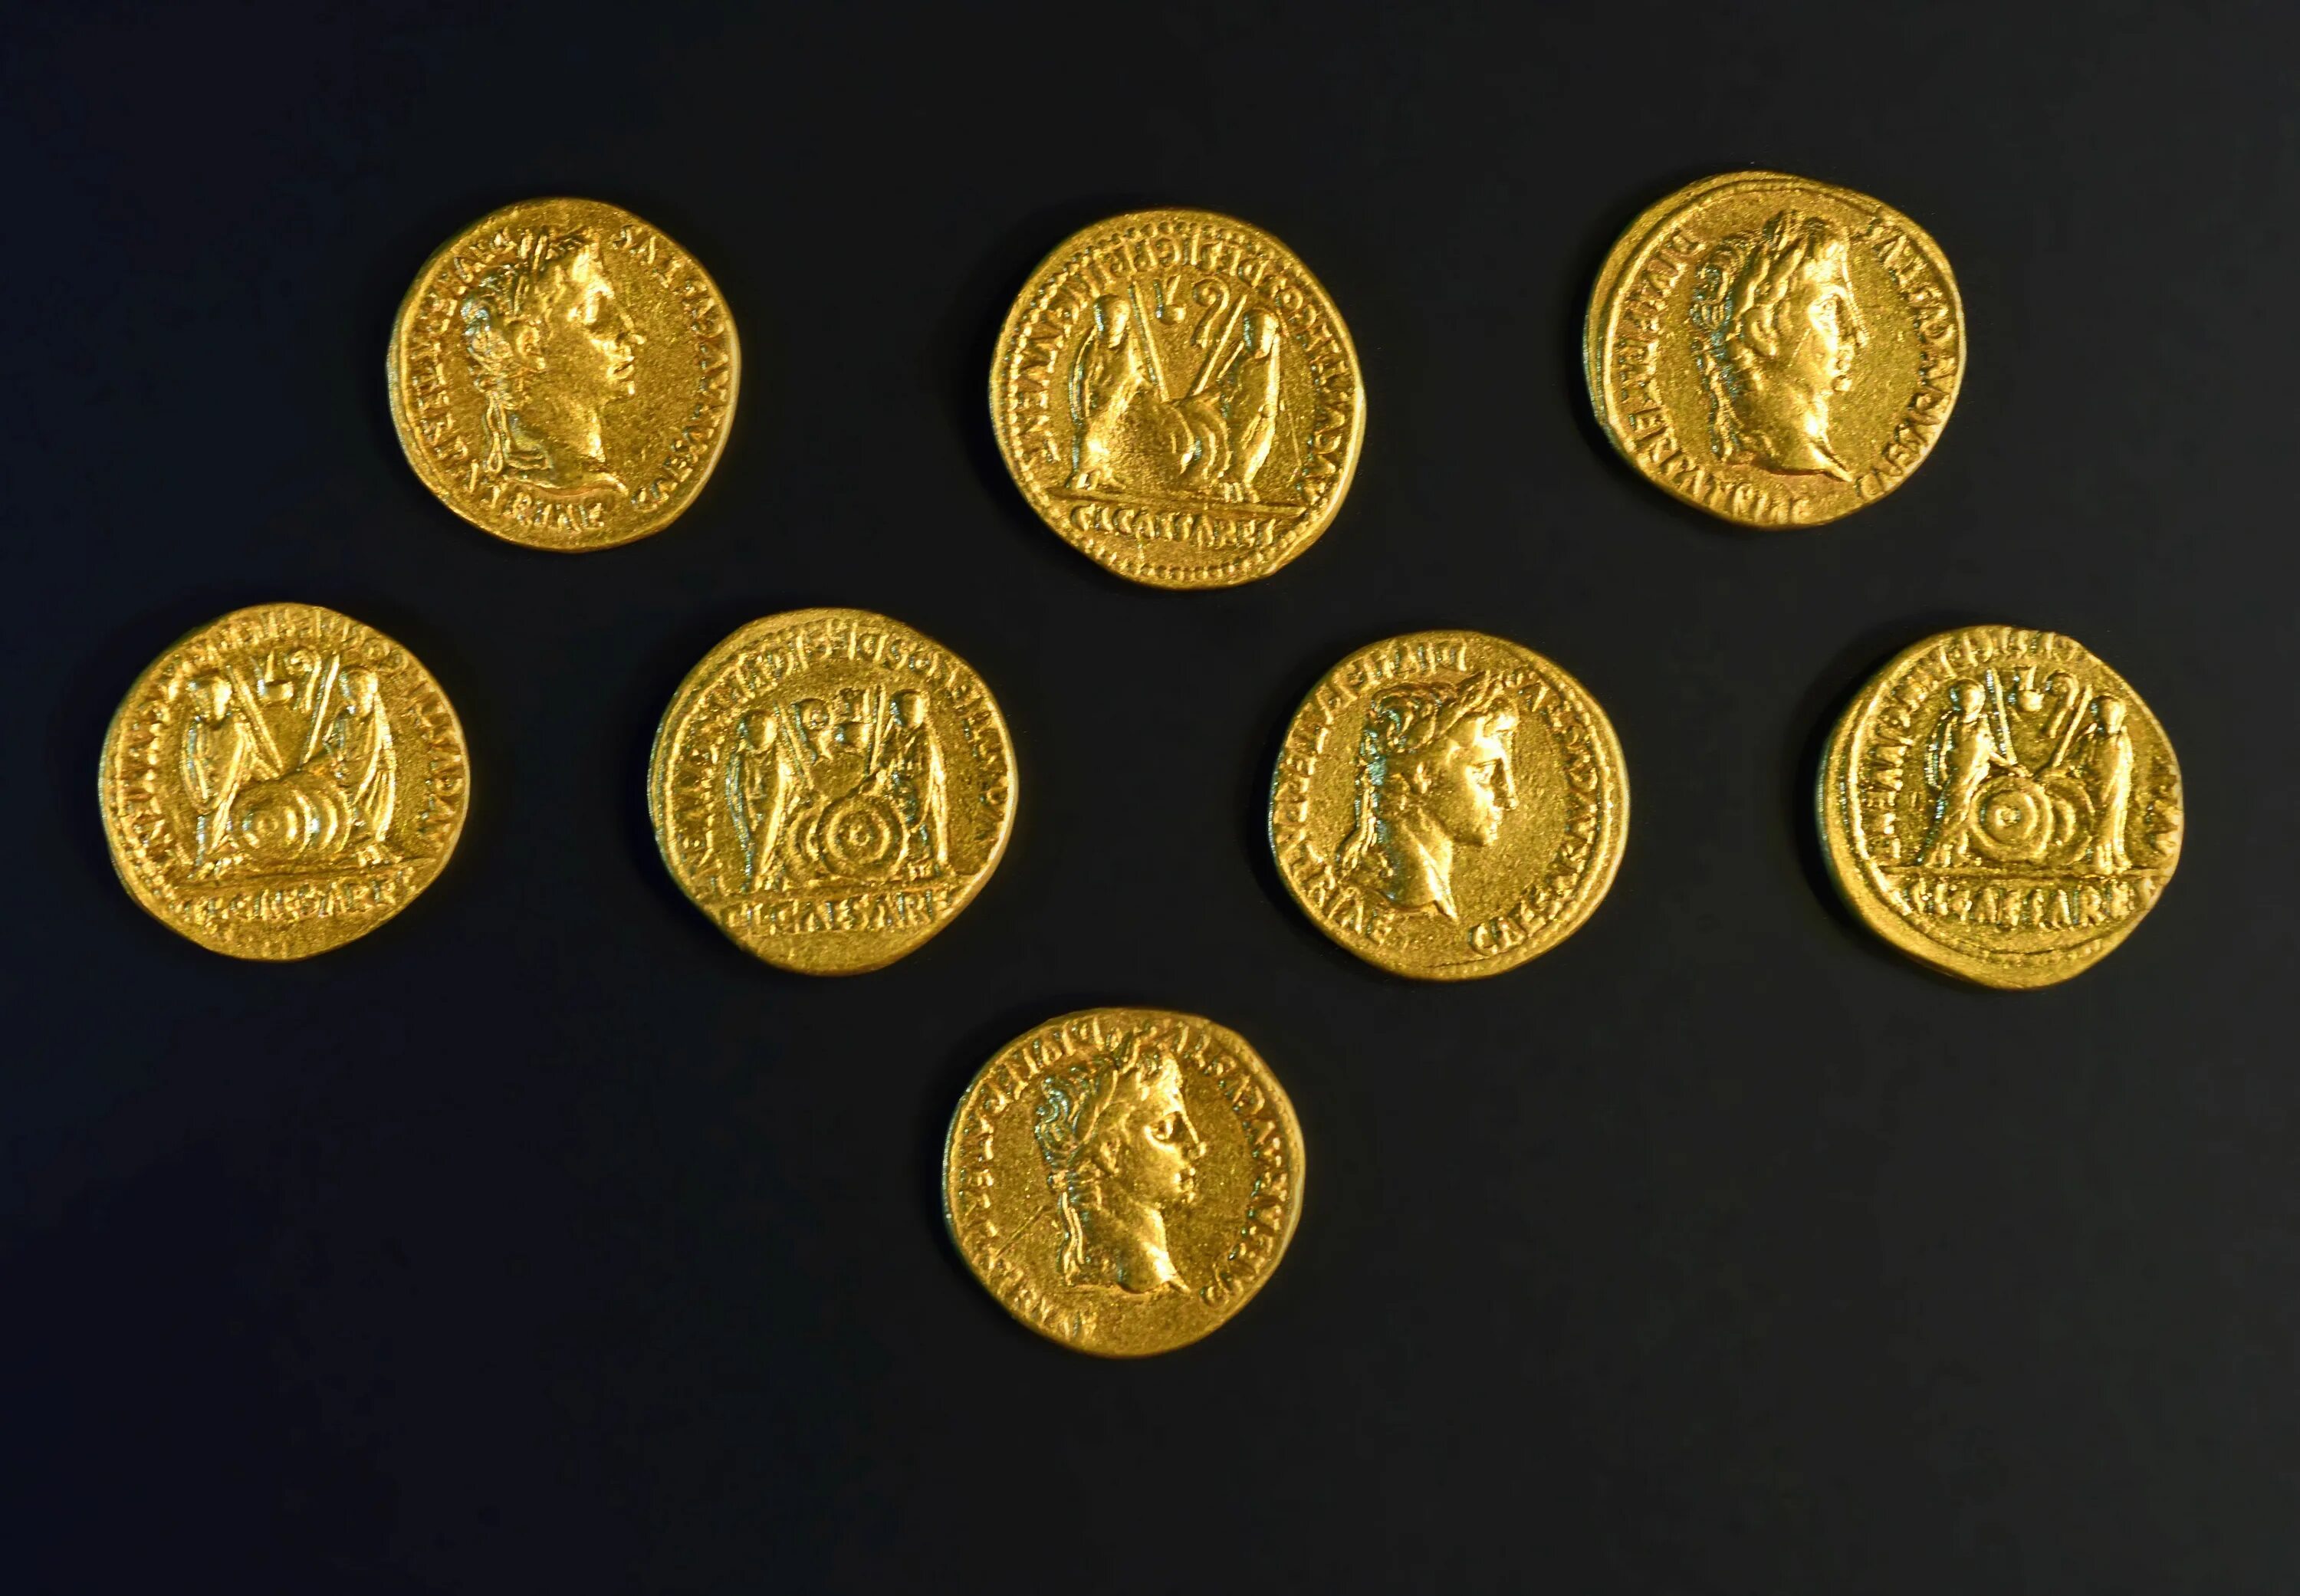 Римская Золотая монета Франческо Веттори. Коллекционные золотые монеты. Коллекция золотых монет. Старинные золотые монеты. Купить золотые монеты сегодня